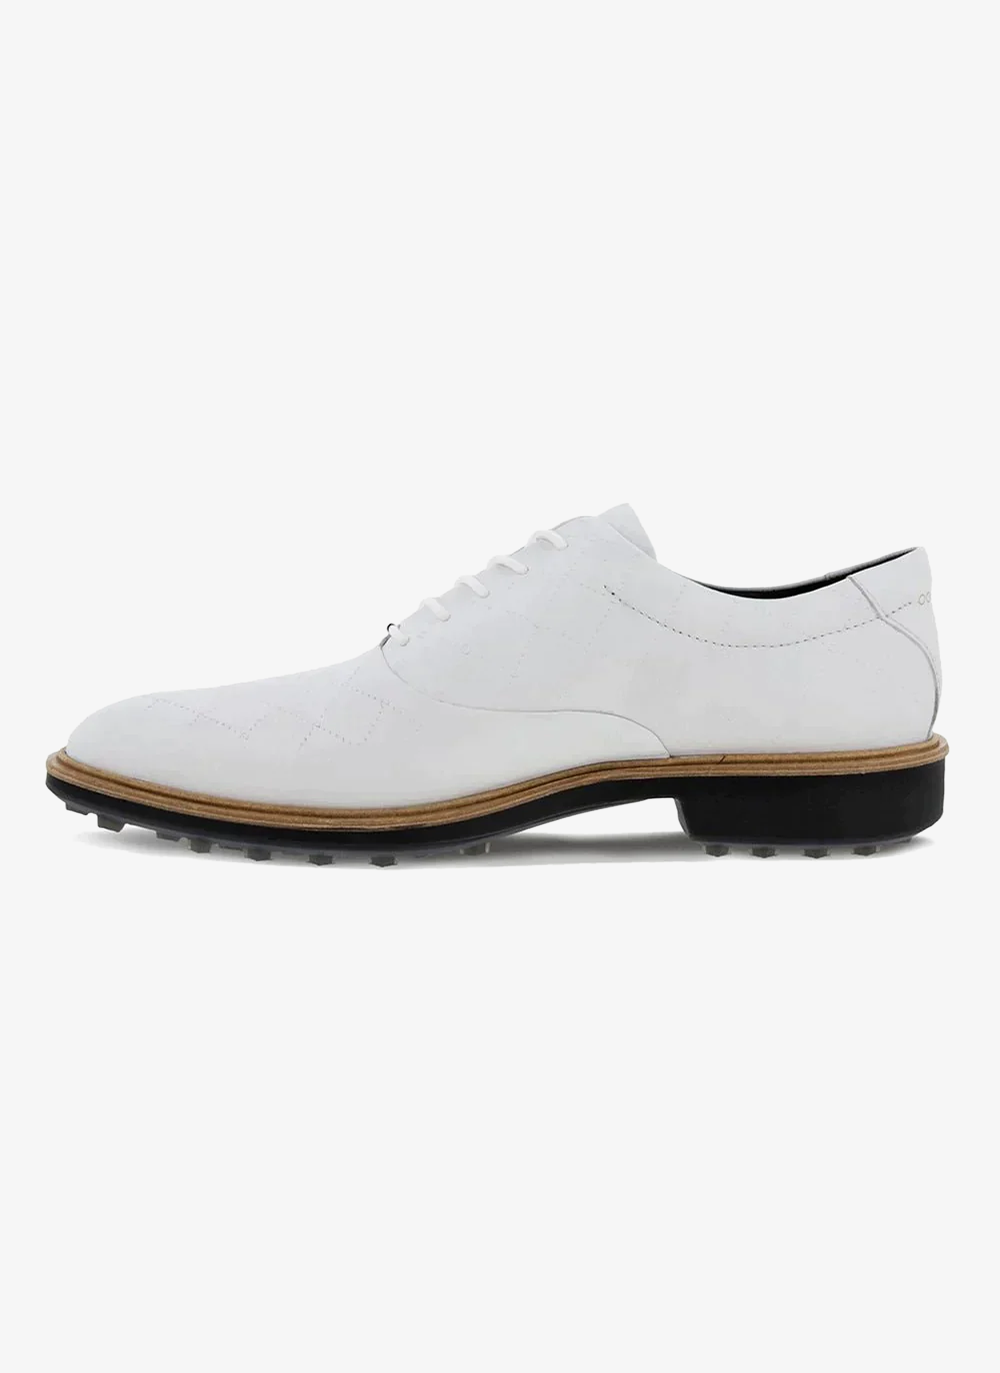 Ecco Classic Hybrid Golf Shoes 110214